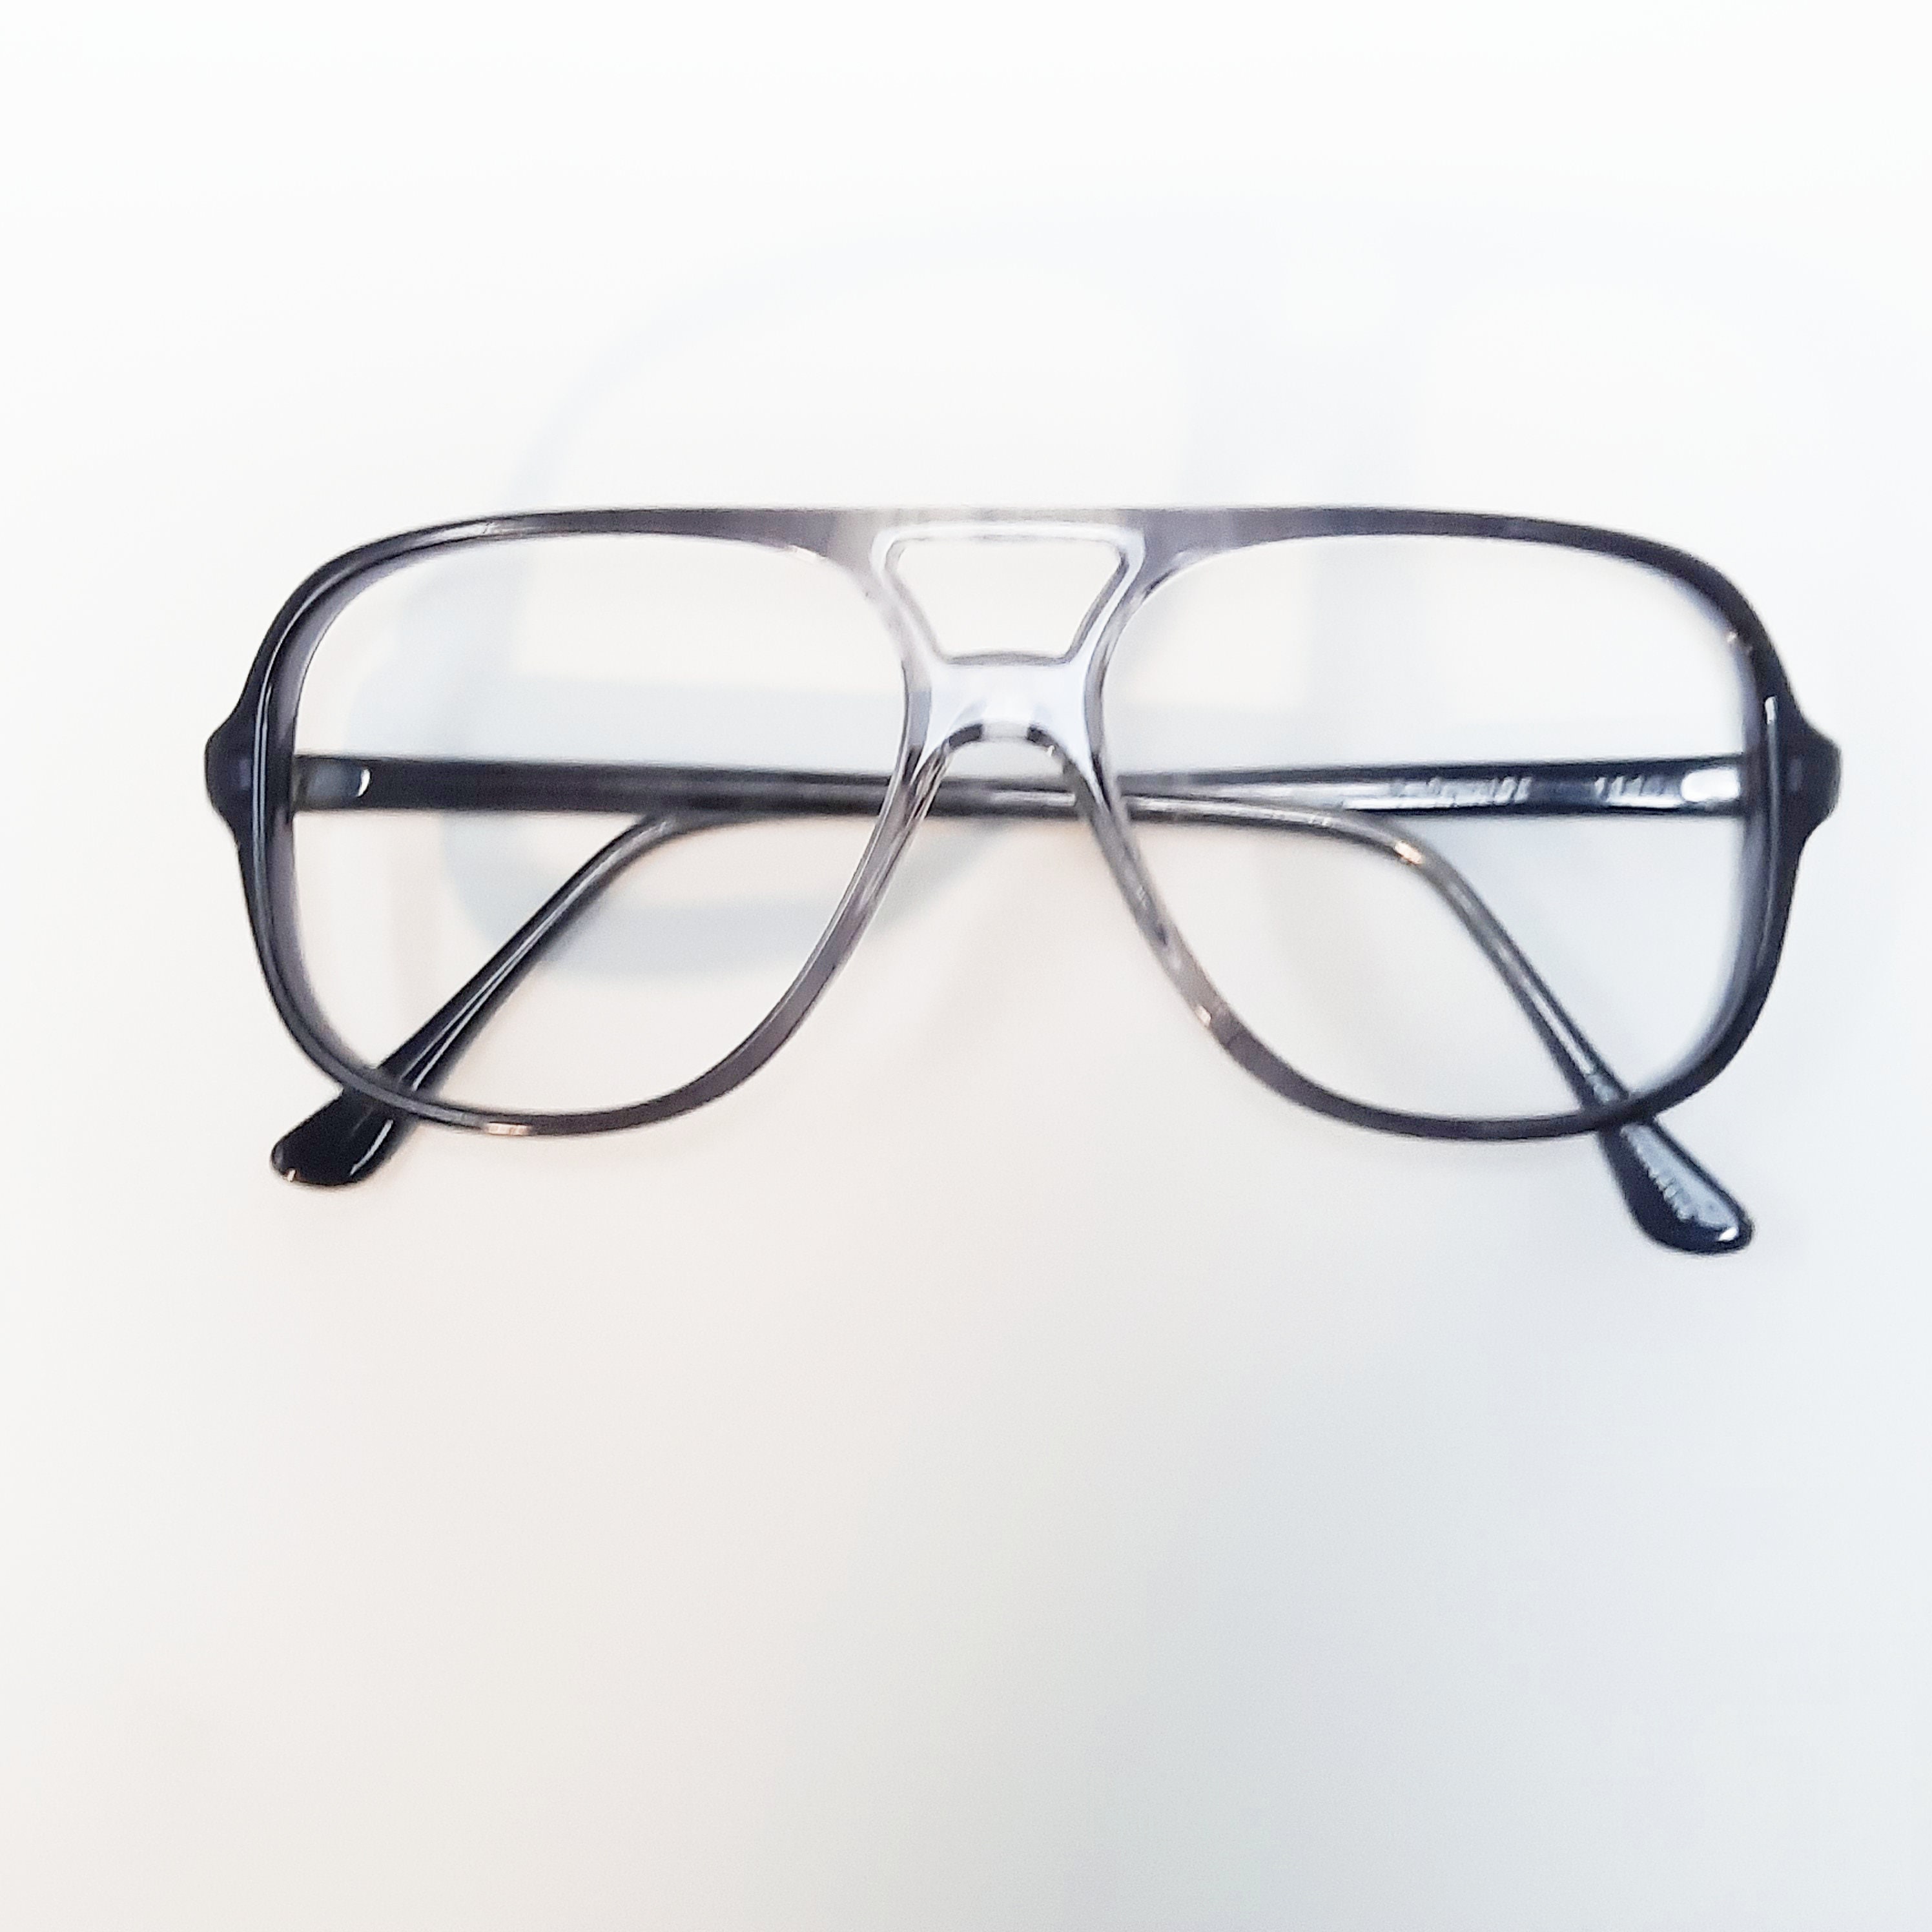 Vintage Aviator Eyeglasses Frames Black Clear Gradient Glasses